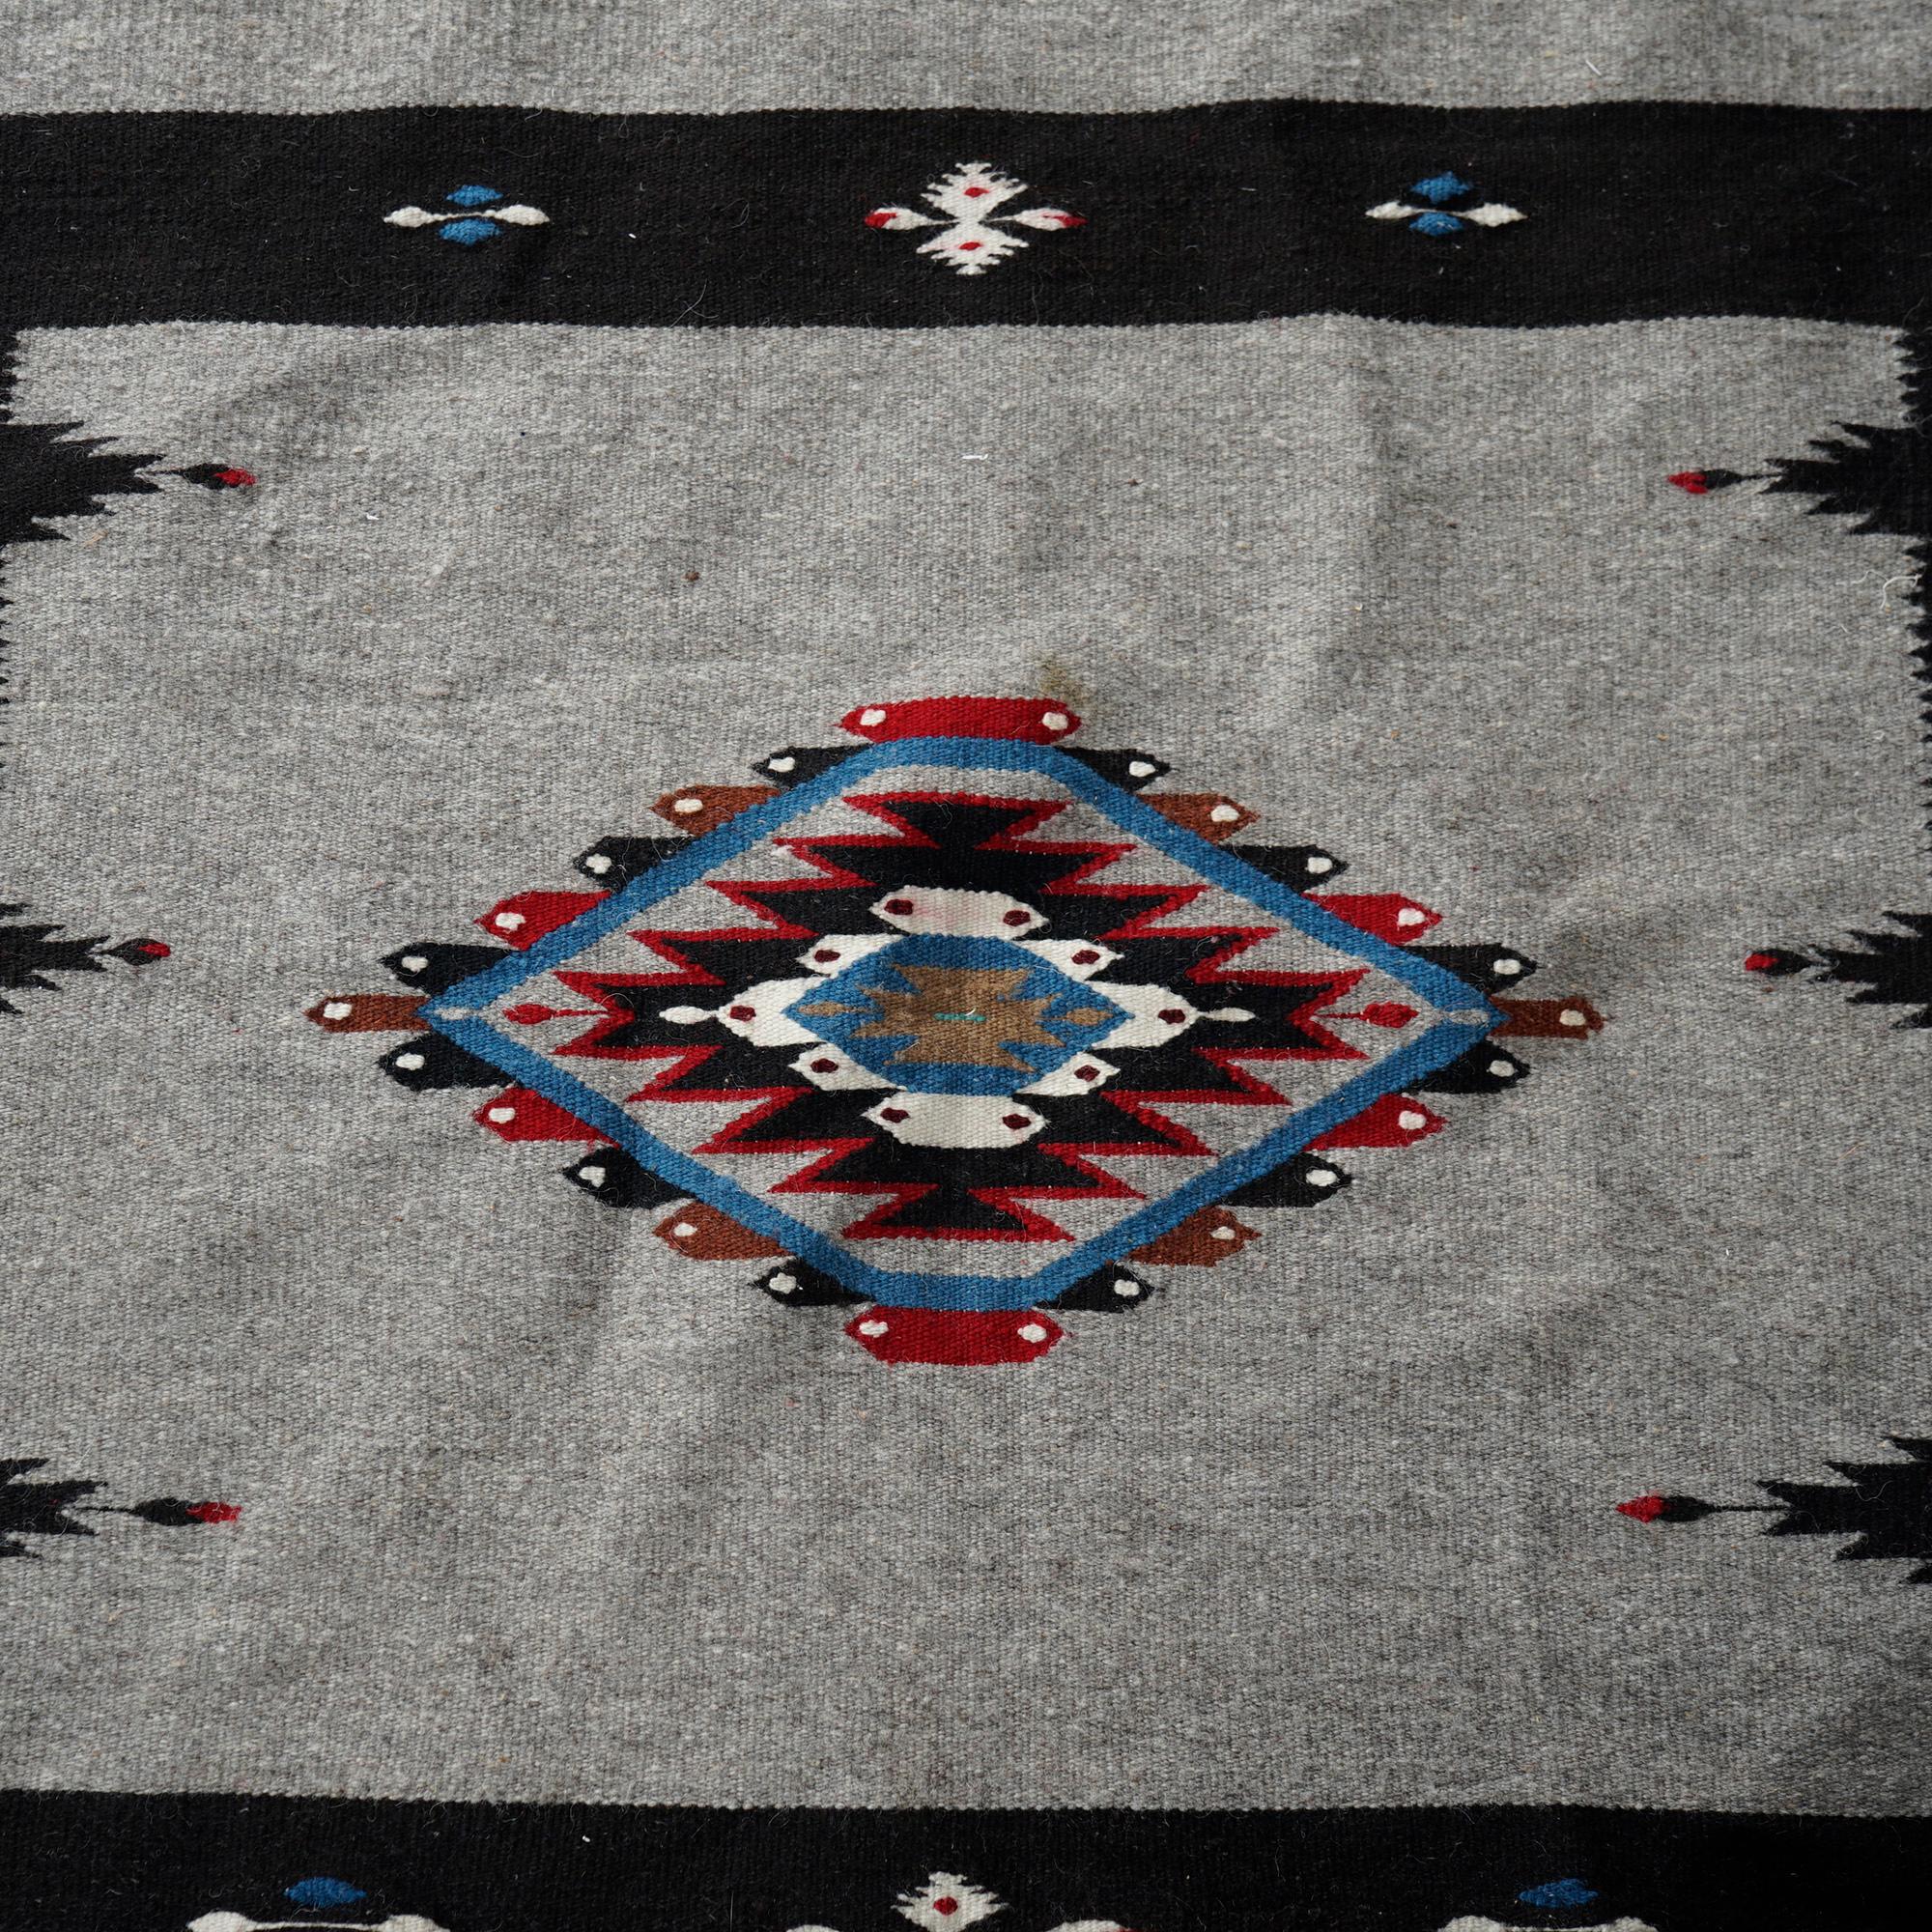 20th Century Antique Southwestern American Indian Navajo Style Rug, Circa 1930